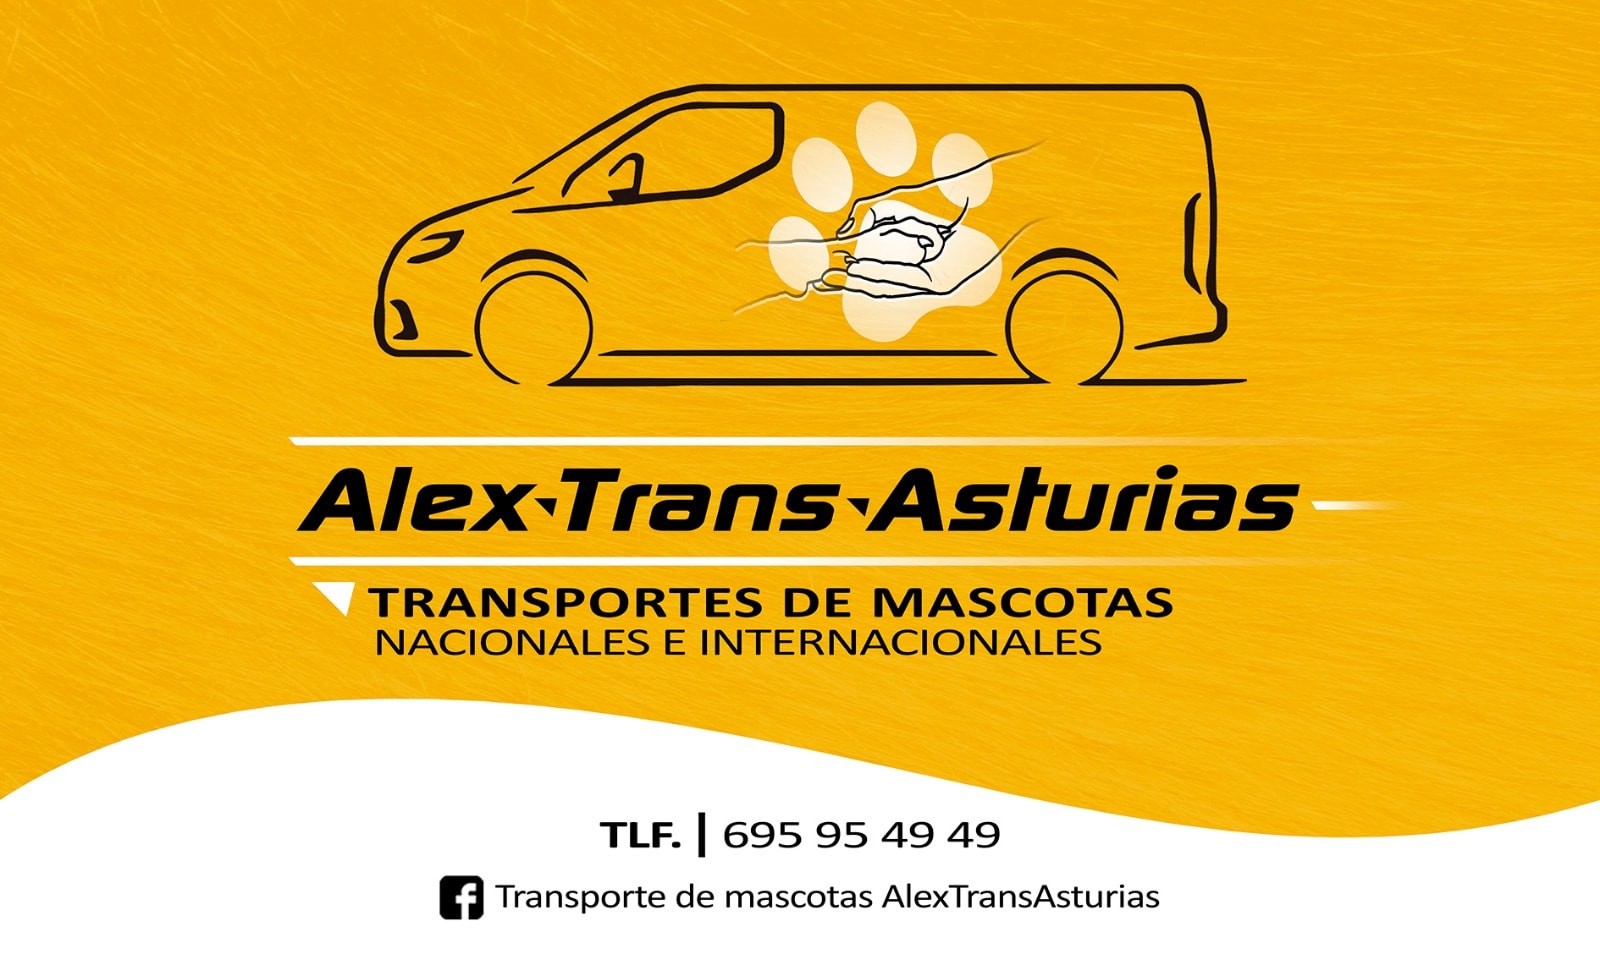 Alex-Trans Asturias